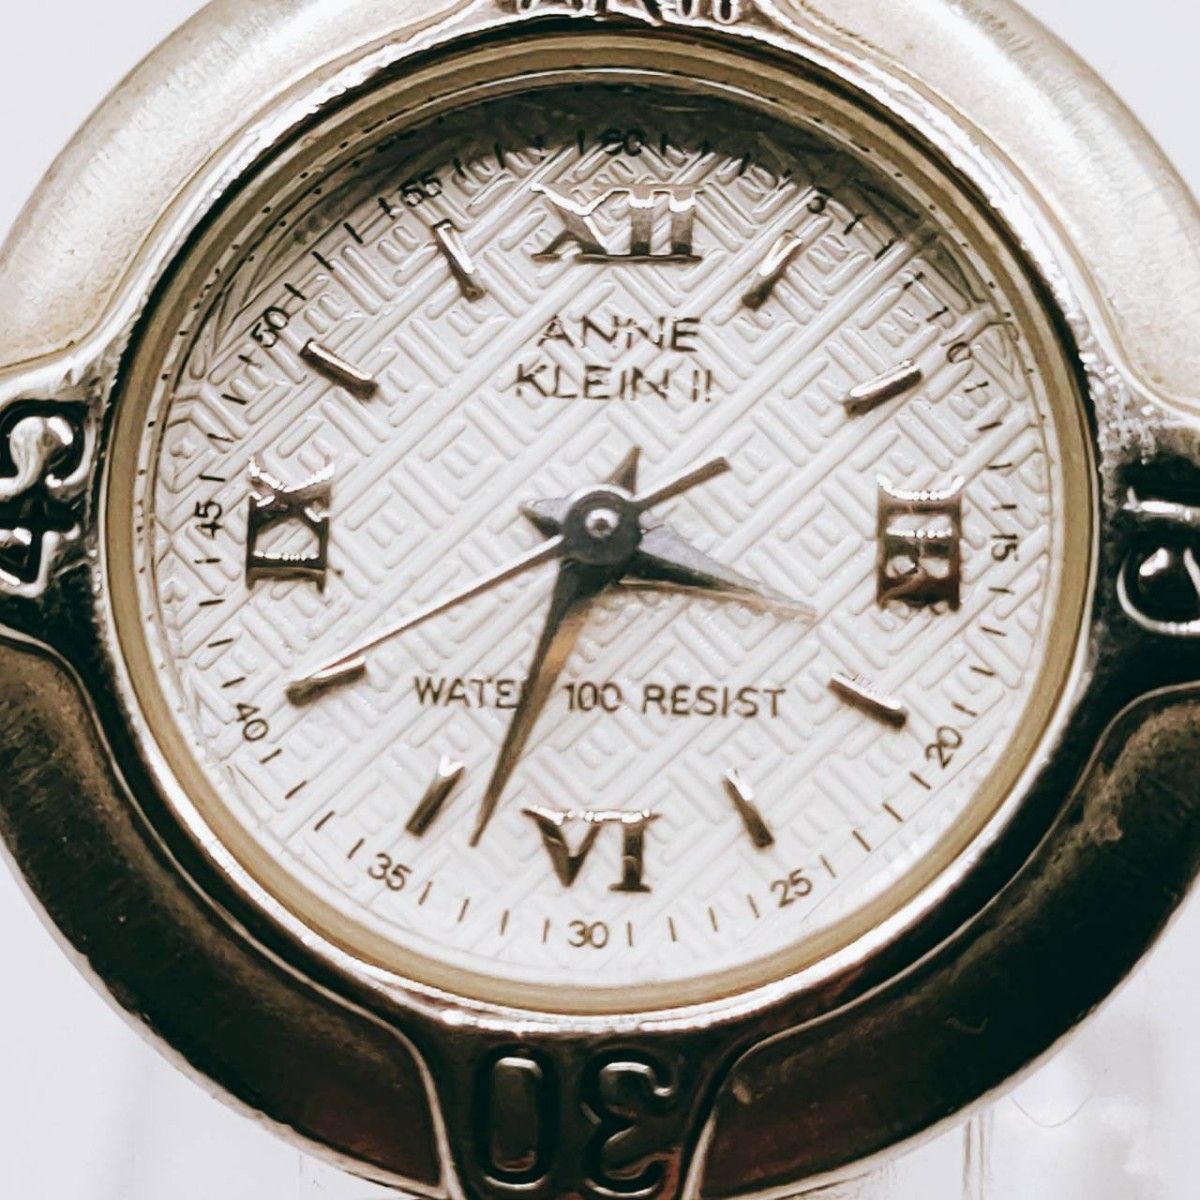 #20 ANNE KLEIN 2 アンクライン 腕時計 アナログ 3針 白文字盤 シルバー基調 時計 とけい トケイ アクセサリー